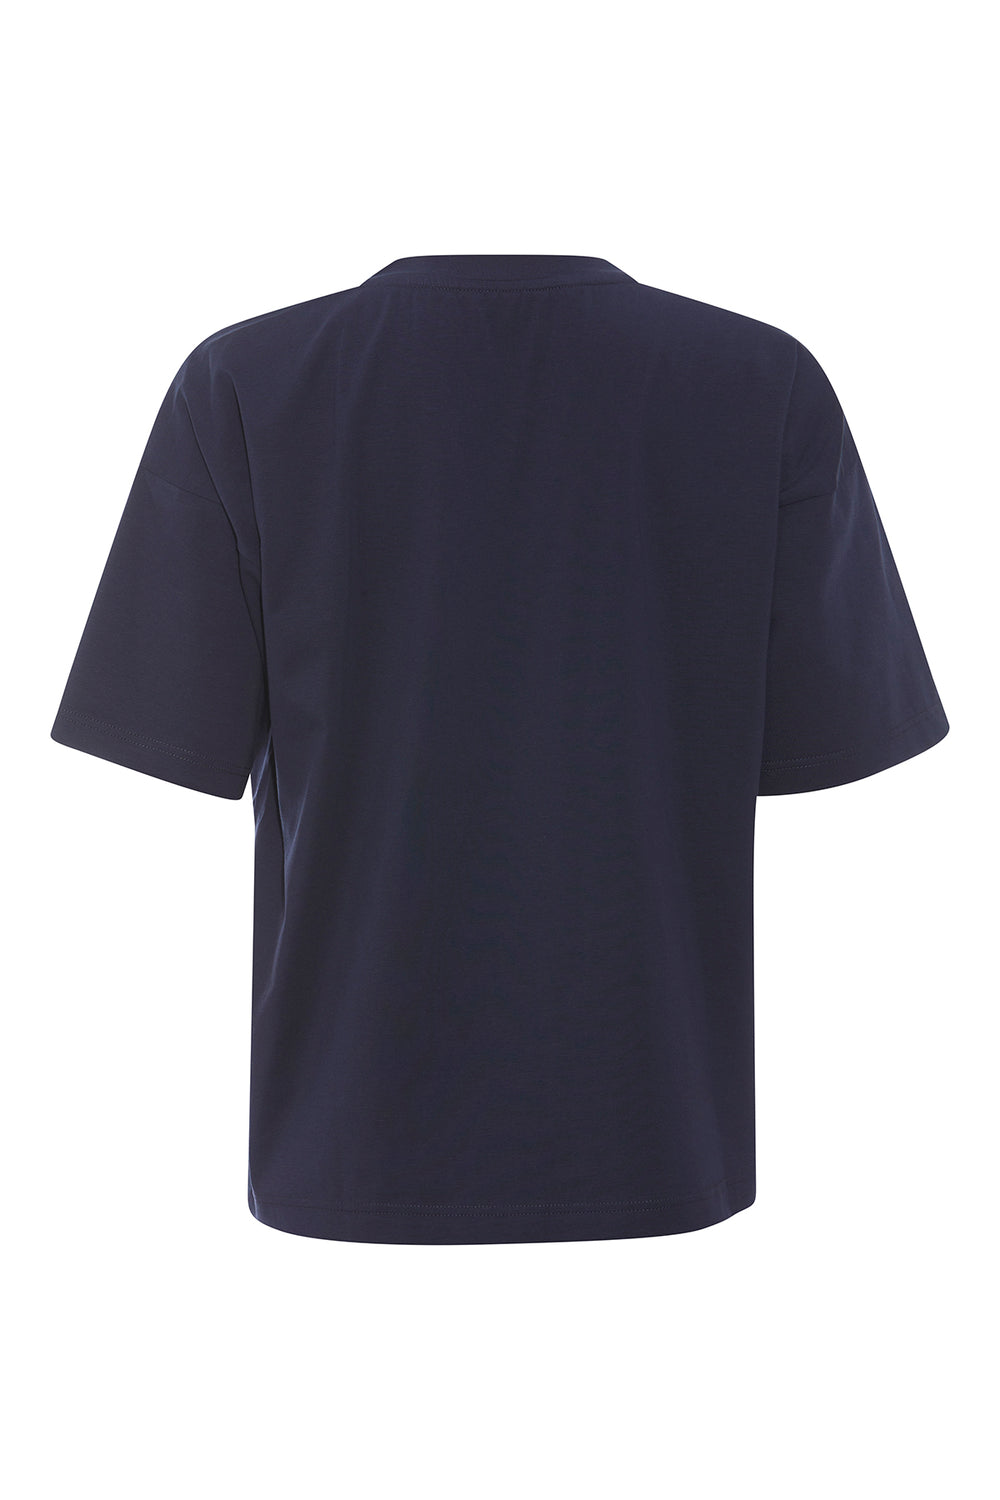 PBO Bravo T-shirt T-SHIRTS 30 Navy